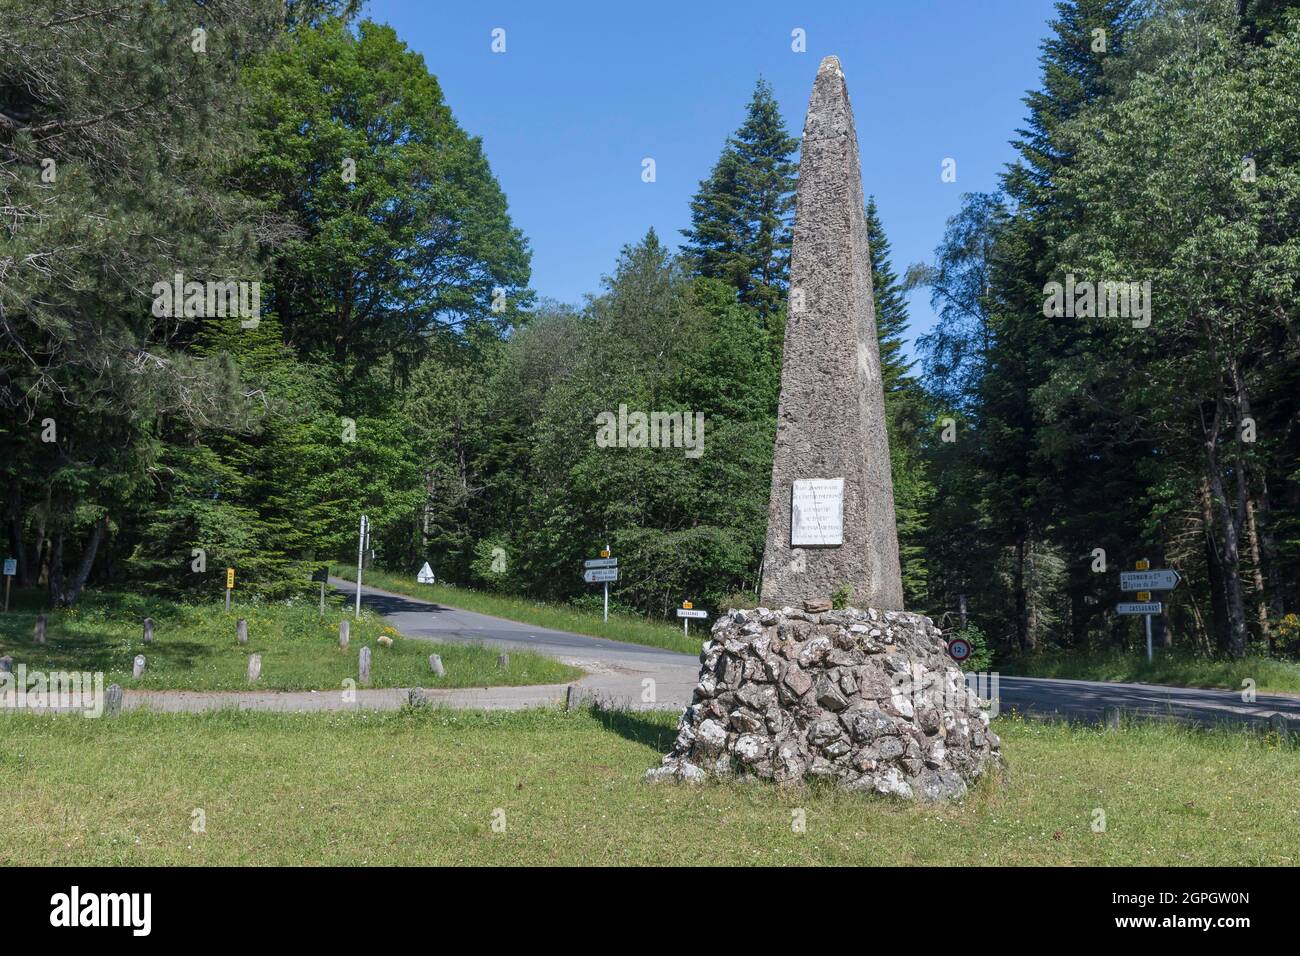 France, Lozere, Saint-Germain-de-Calberte, the Plan de Fontmort, Cevennes National Park, obelisk to commemorate the hundredth anniversary of the Edit de Tolerance Stock Photo